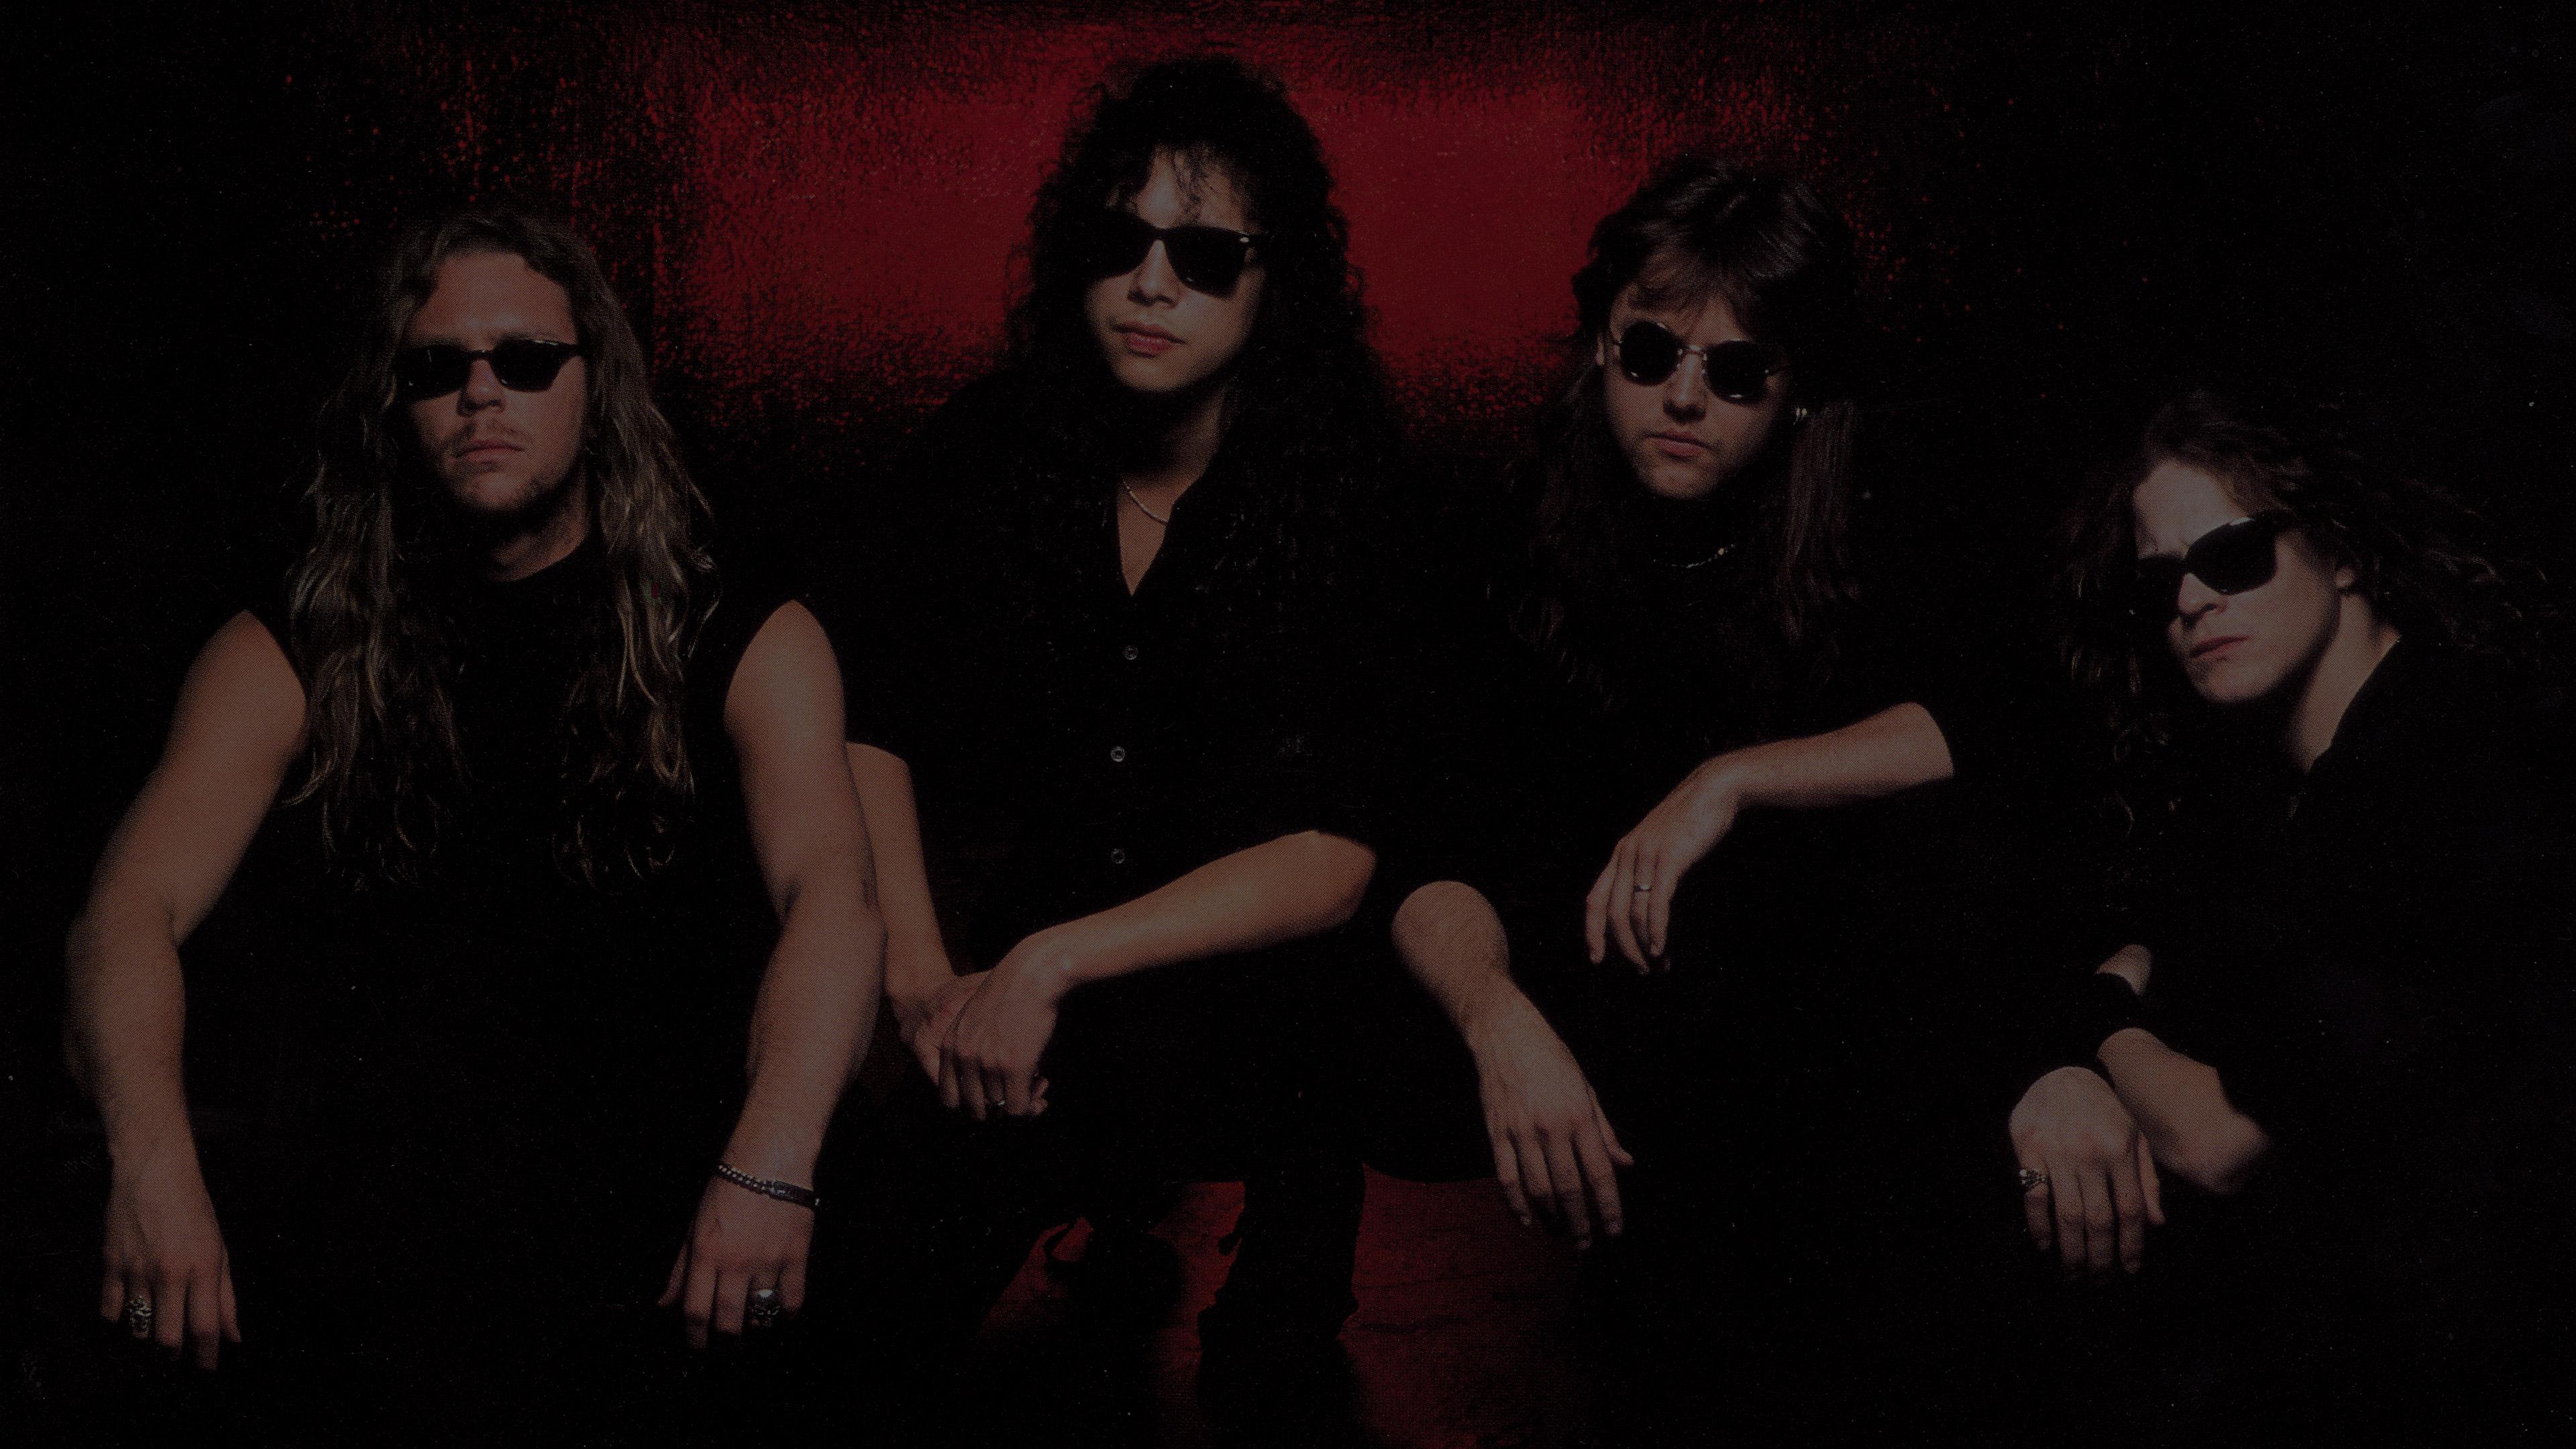 Banner Image for Metallica's song "Blackened"